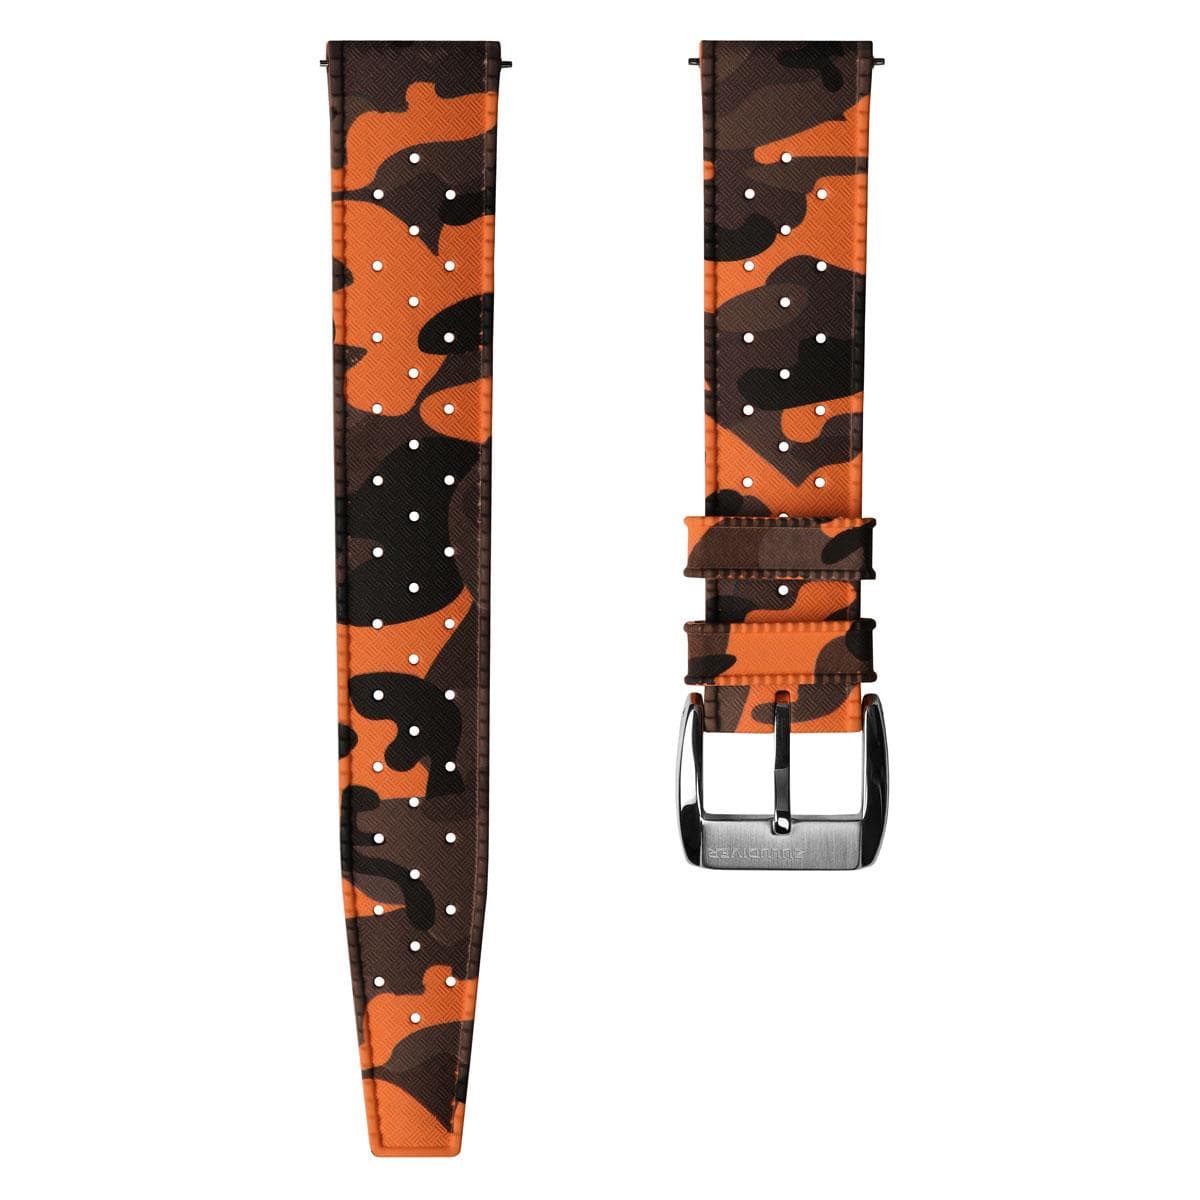 ZULUDIVER Tropic Style FKM Rubber Watch Strap - Camouflage Orange